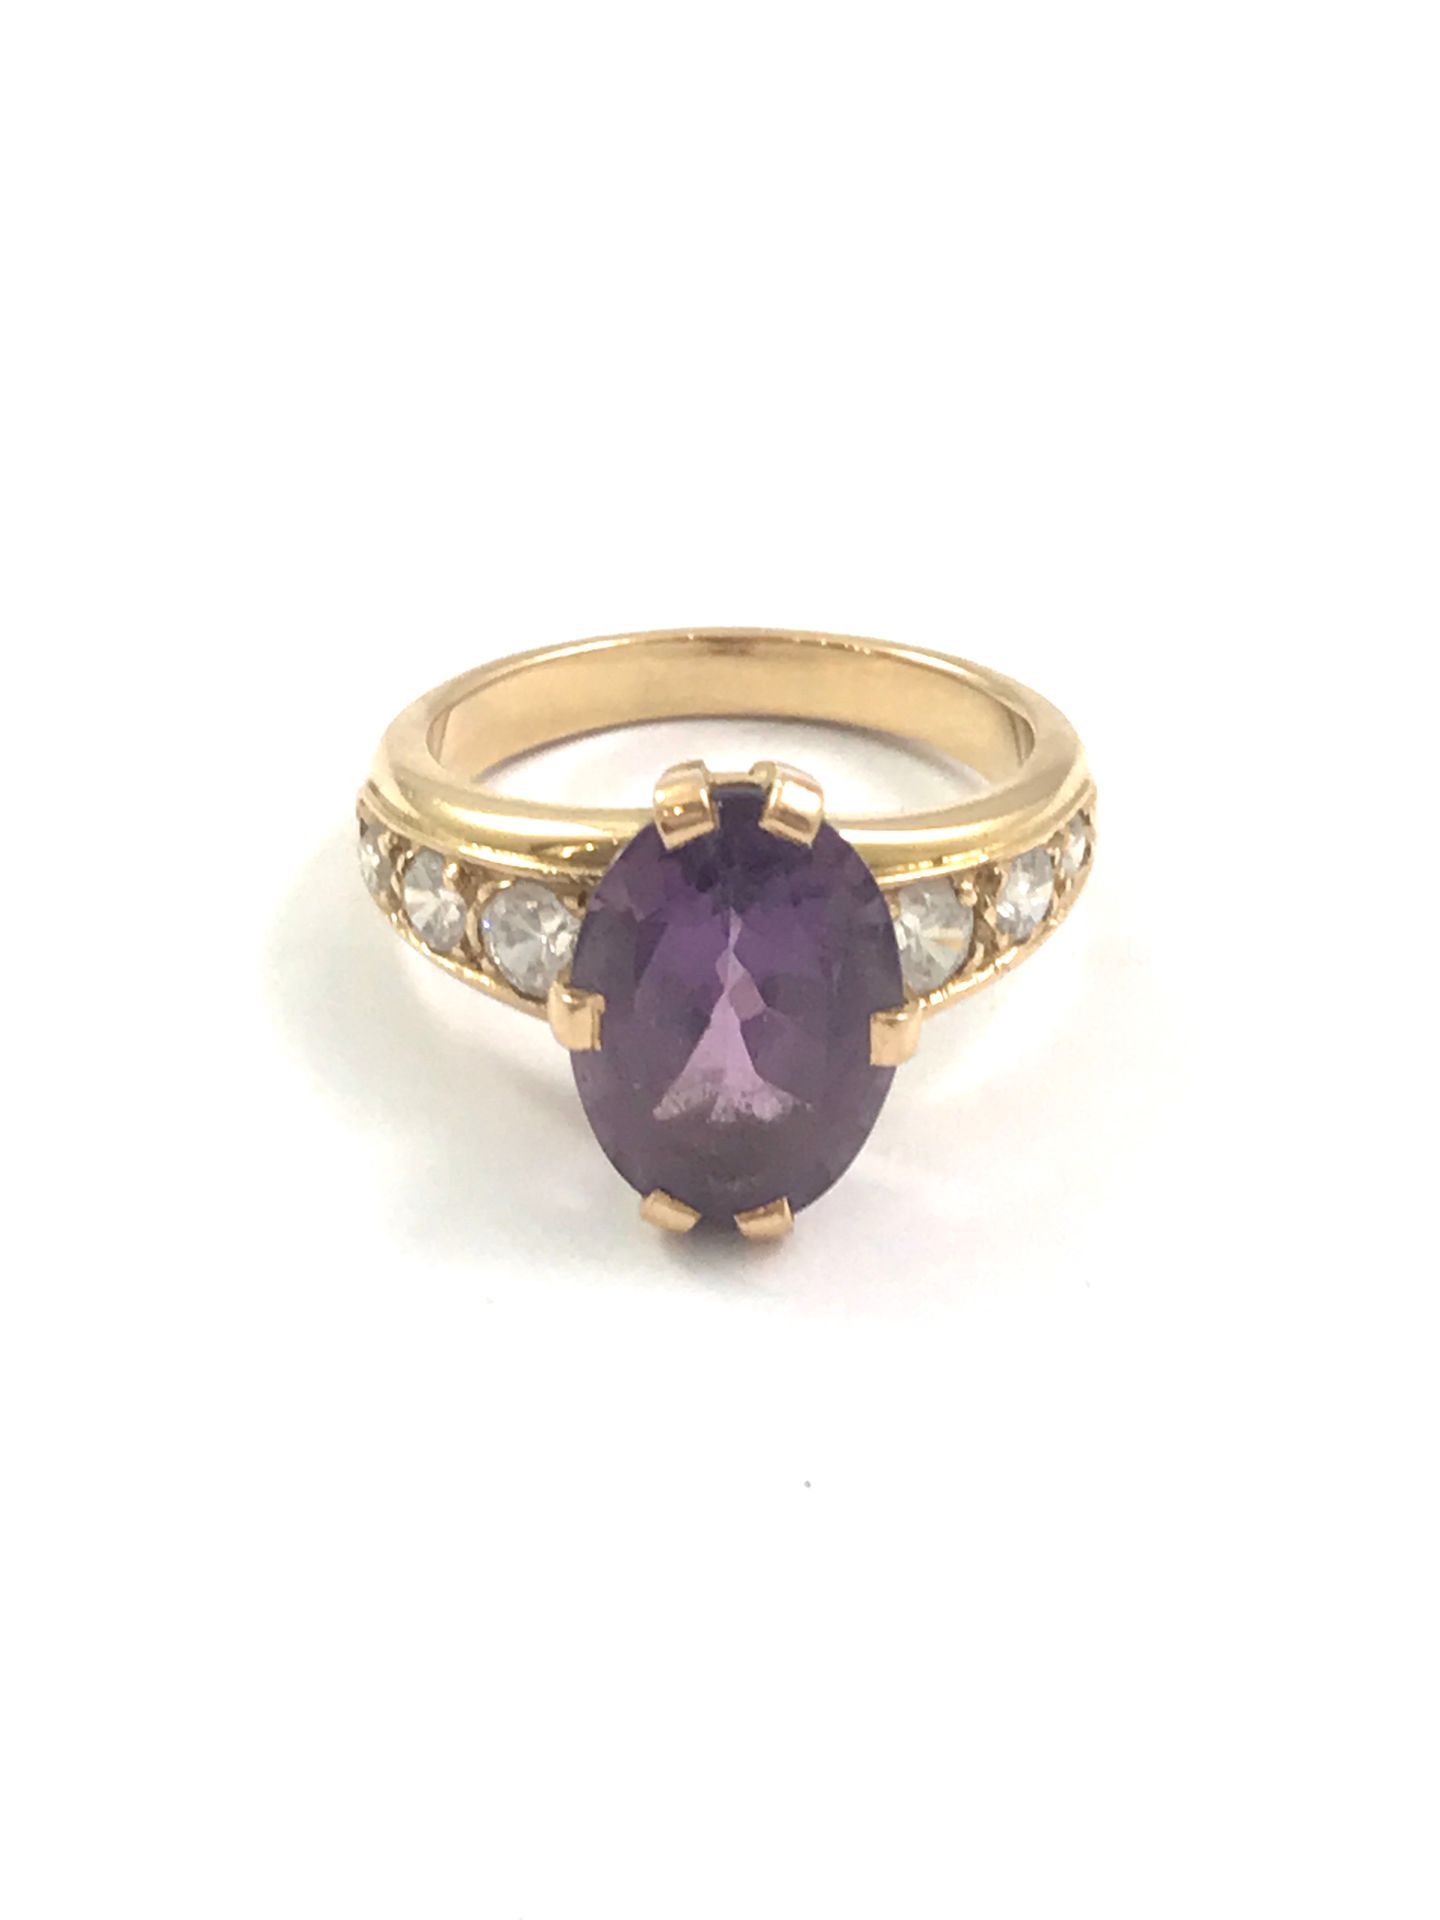 Null 18K黄金750°/00戒指，以椭圆形紫水晶为中心，两侧为白色宝石。紫水晶尺寸：13 x 9毫米。手指大小：55。毛重：6.18克